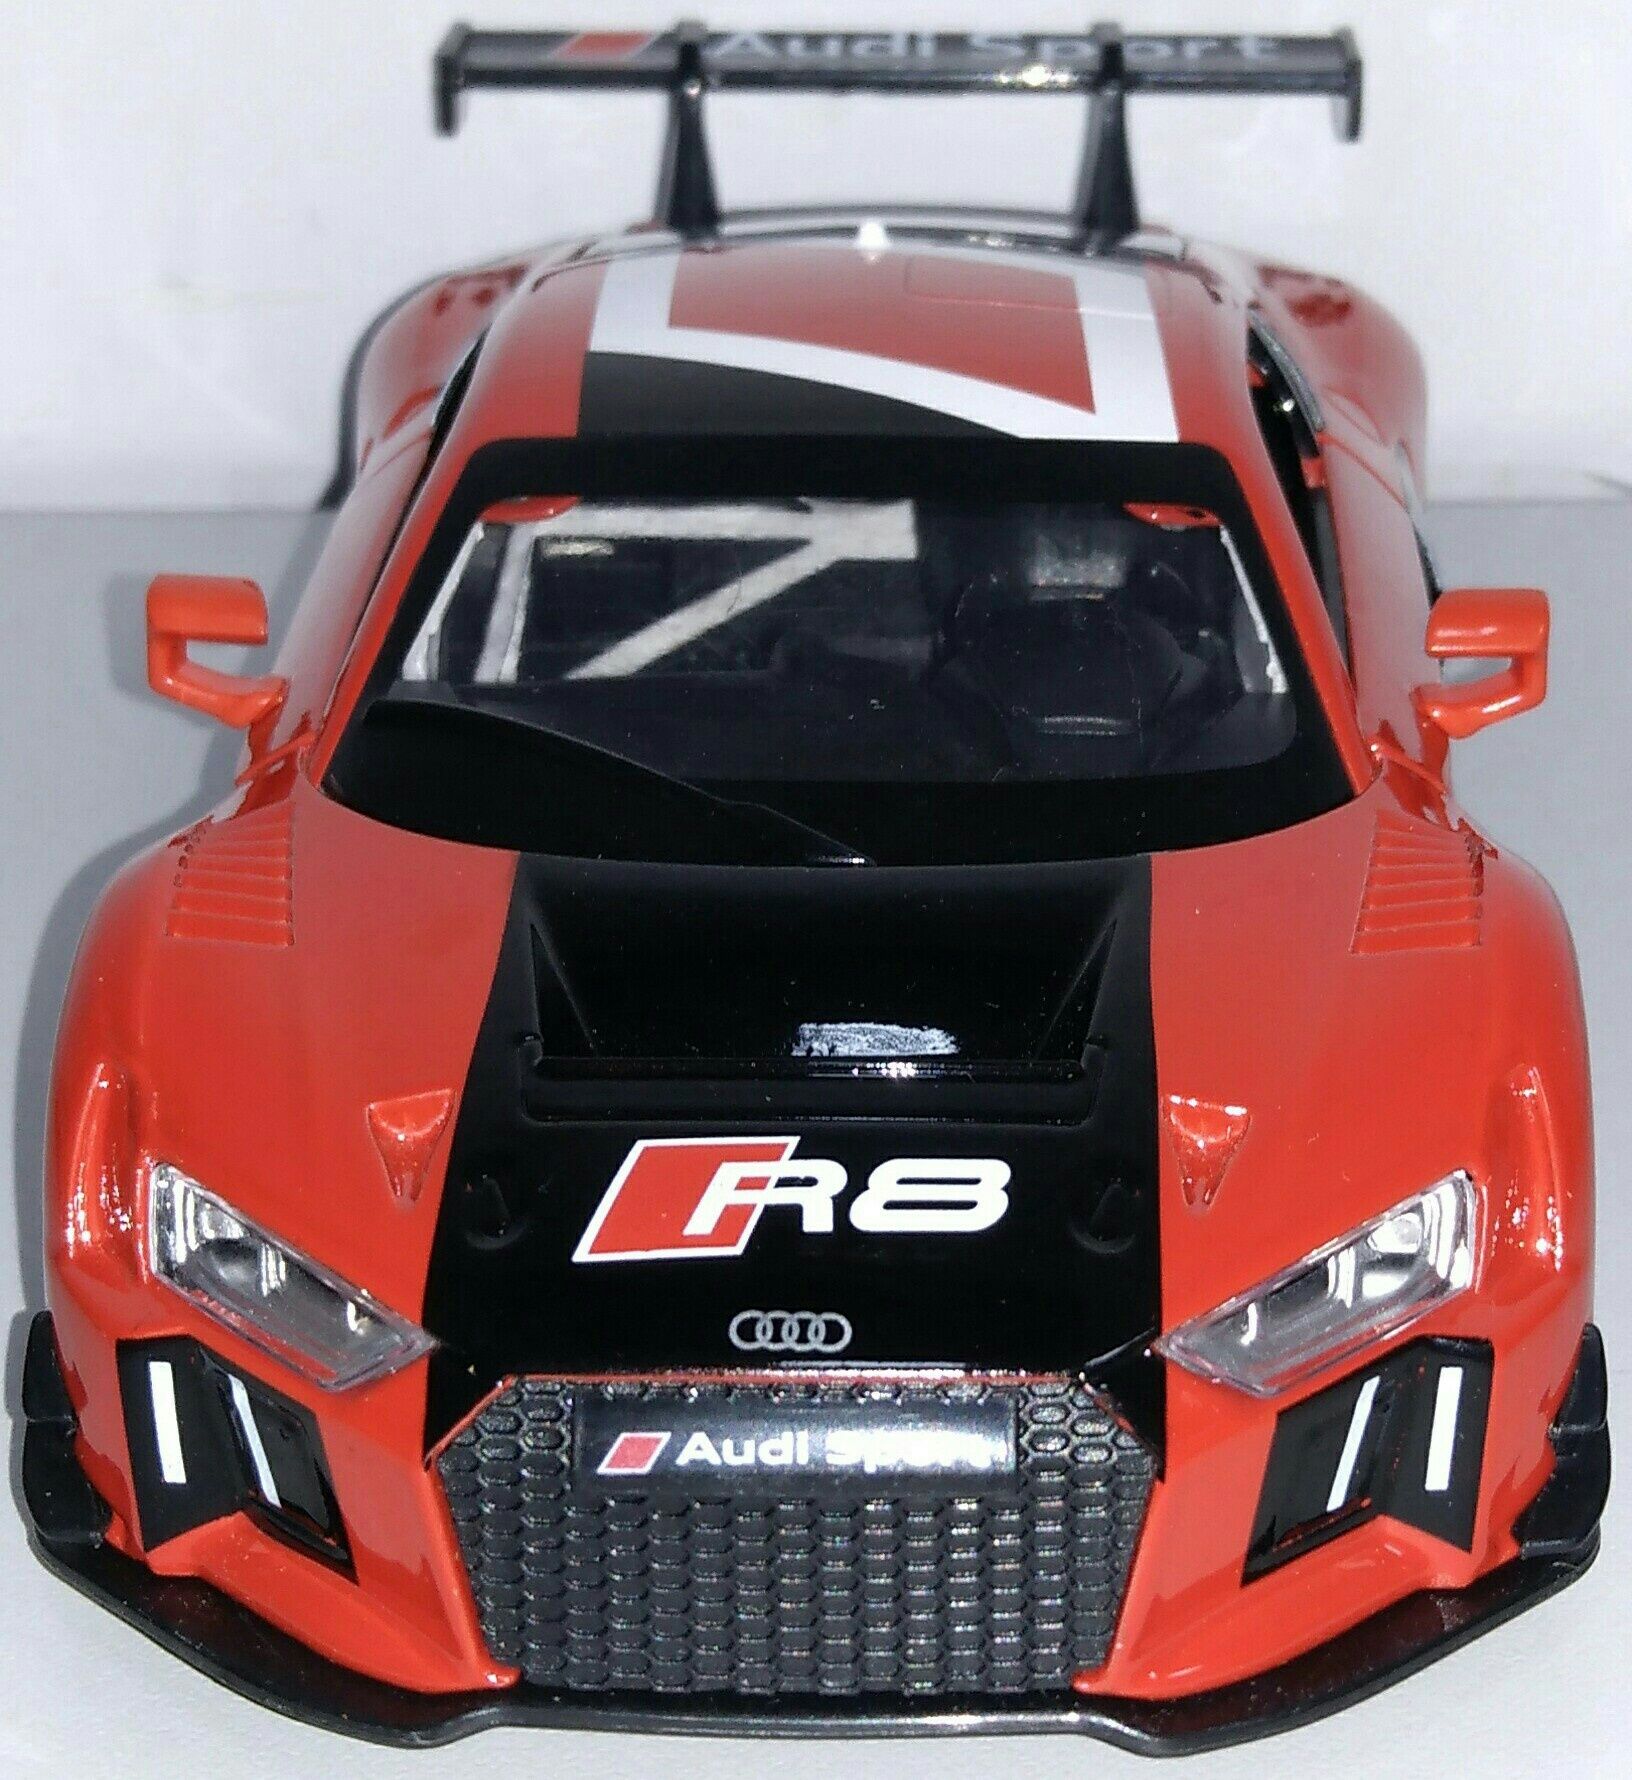 Audi R8 LMS модель "Автопром", масштаб 1:24. Металл, Звук, Свет